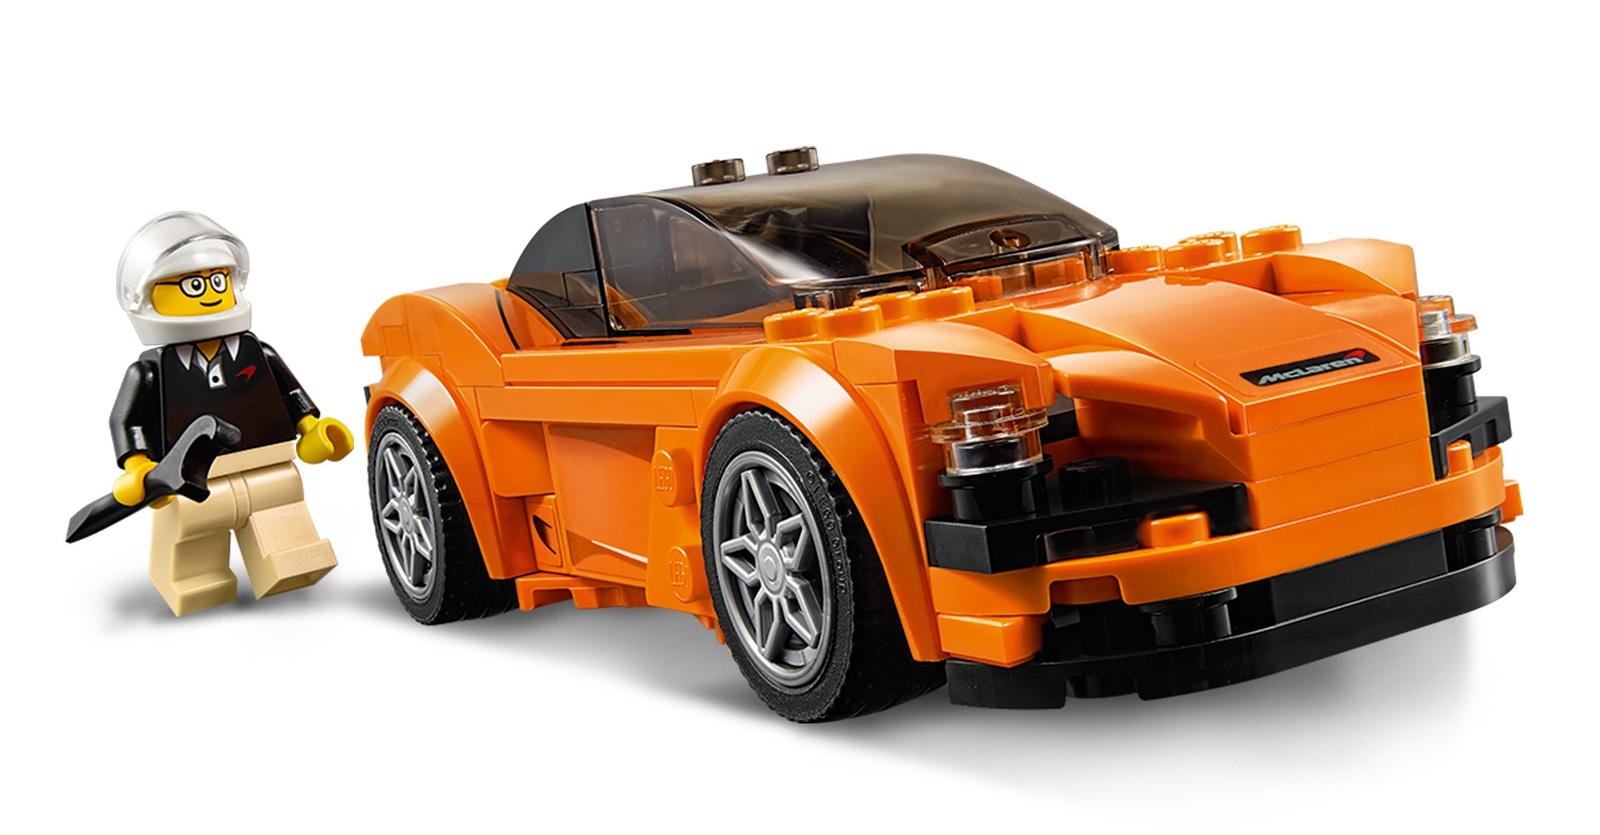 Lego Speed Champions 75880 McLaren 720S